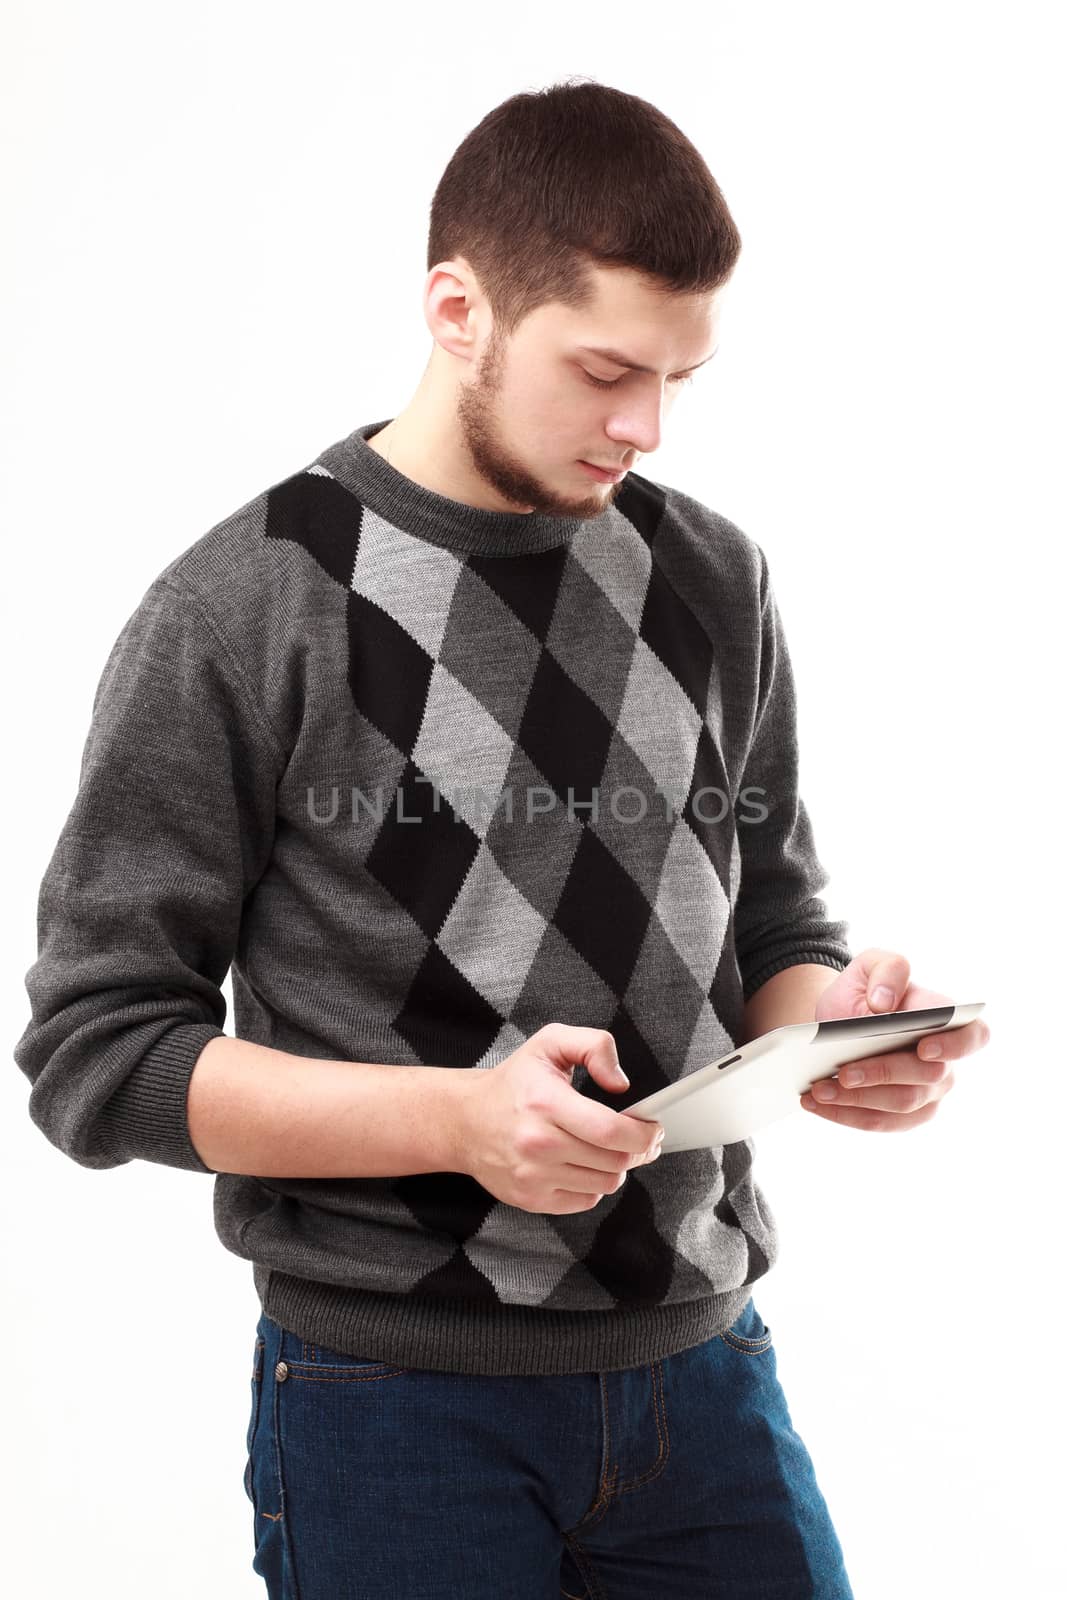 Businessman using his tablet by DmitryOsipov